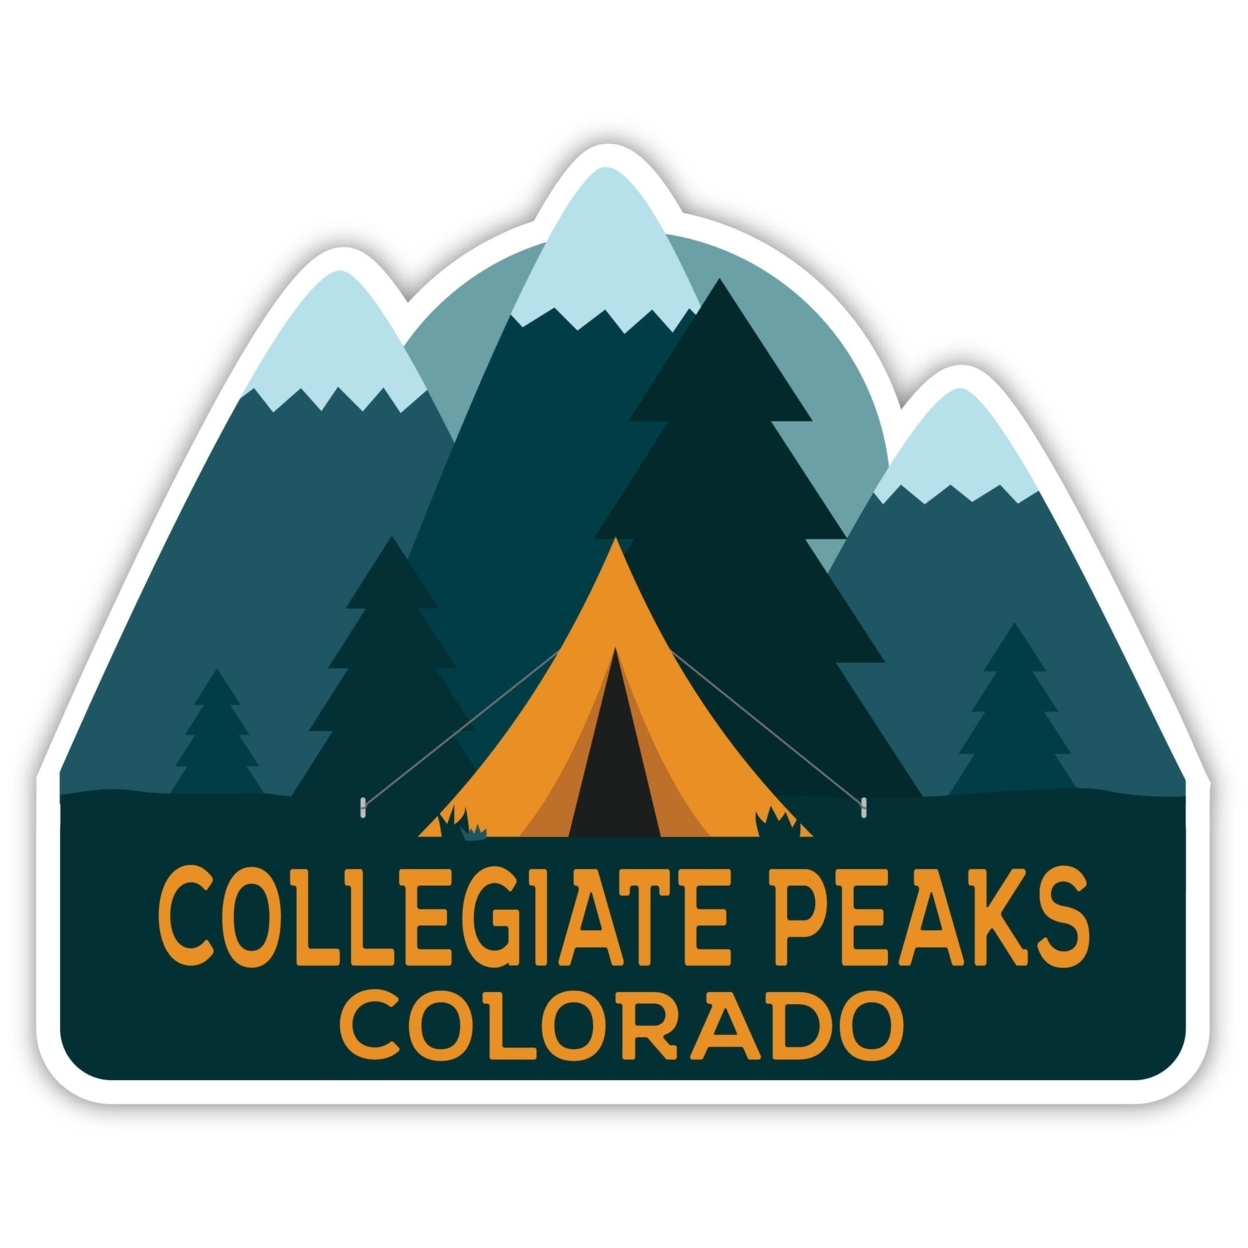 Collegiate Peaks Colorado Souvenir Decorative Stickers (Choose Theme And Size) - Single Unit, 8-Inch, Tent